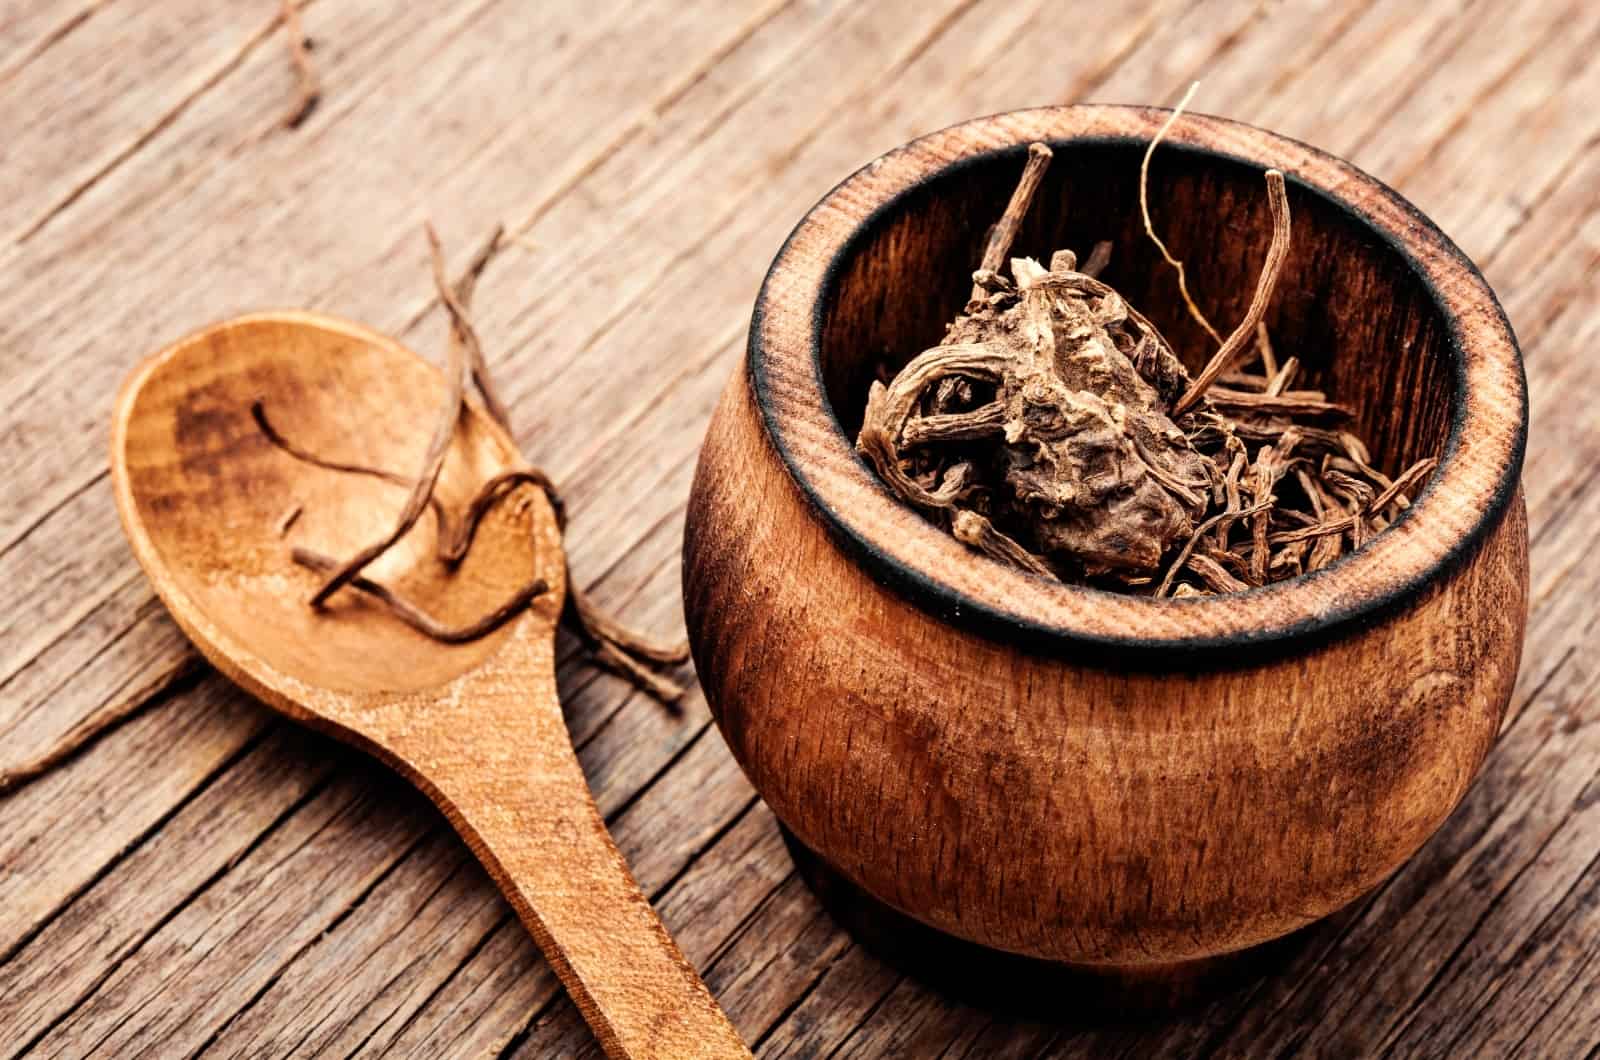 Valerian Root in wooden bowl